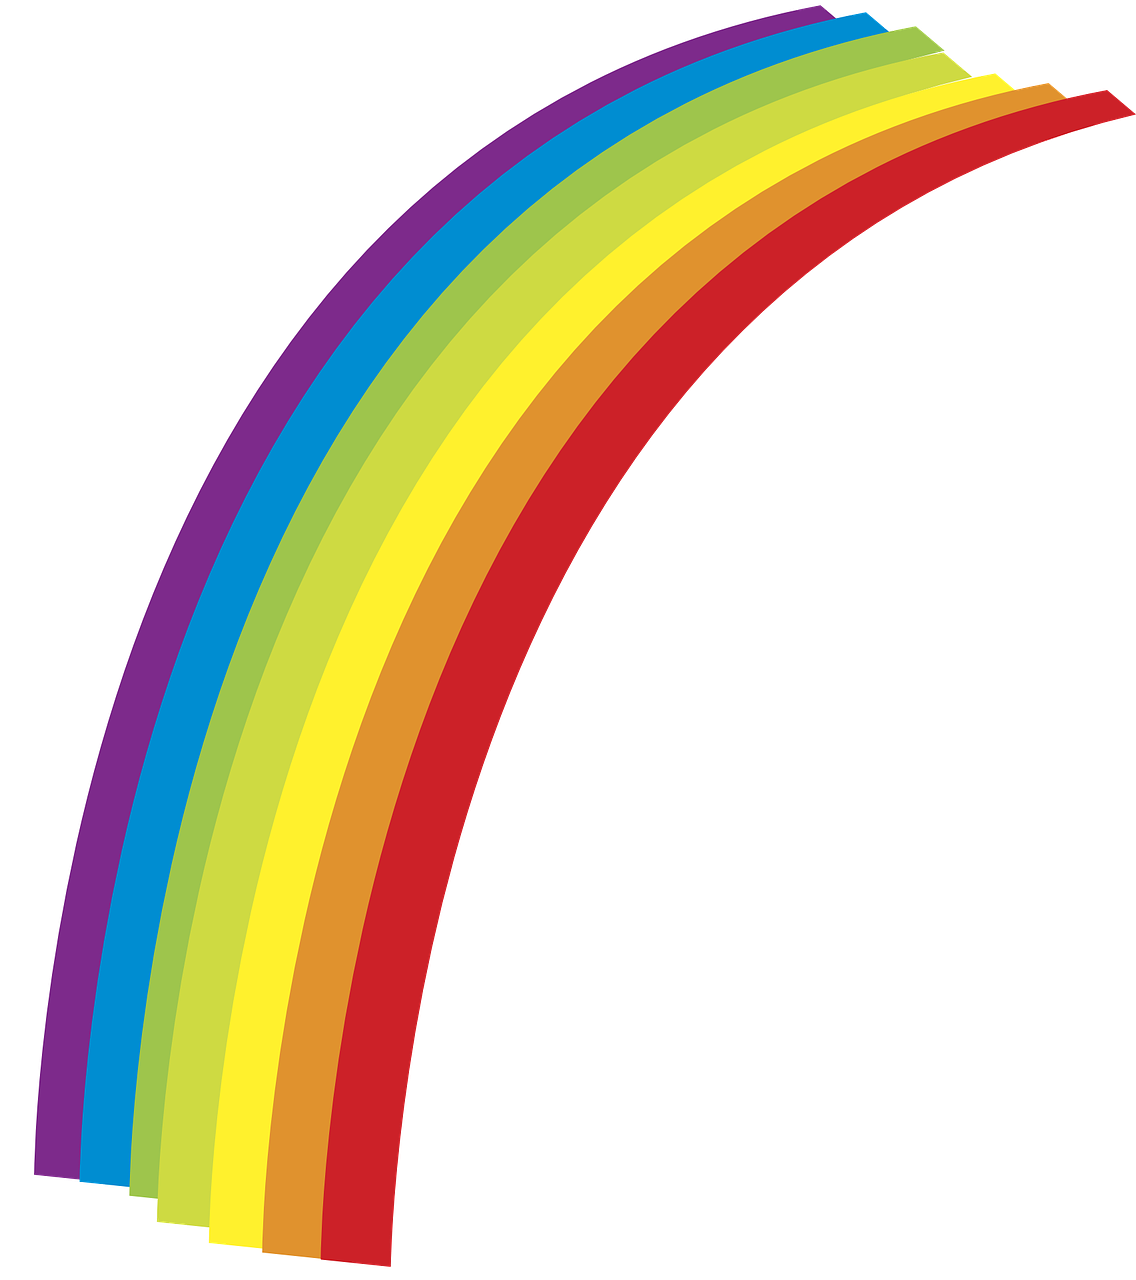 Cartoon Rainbow PNG